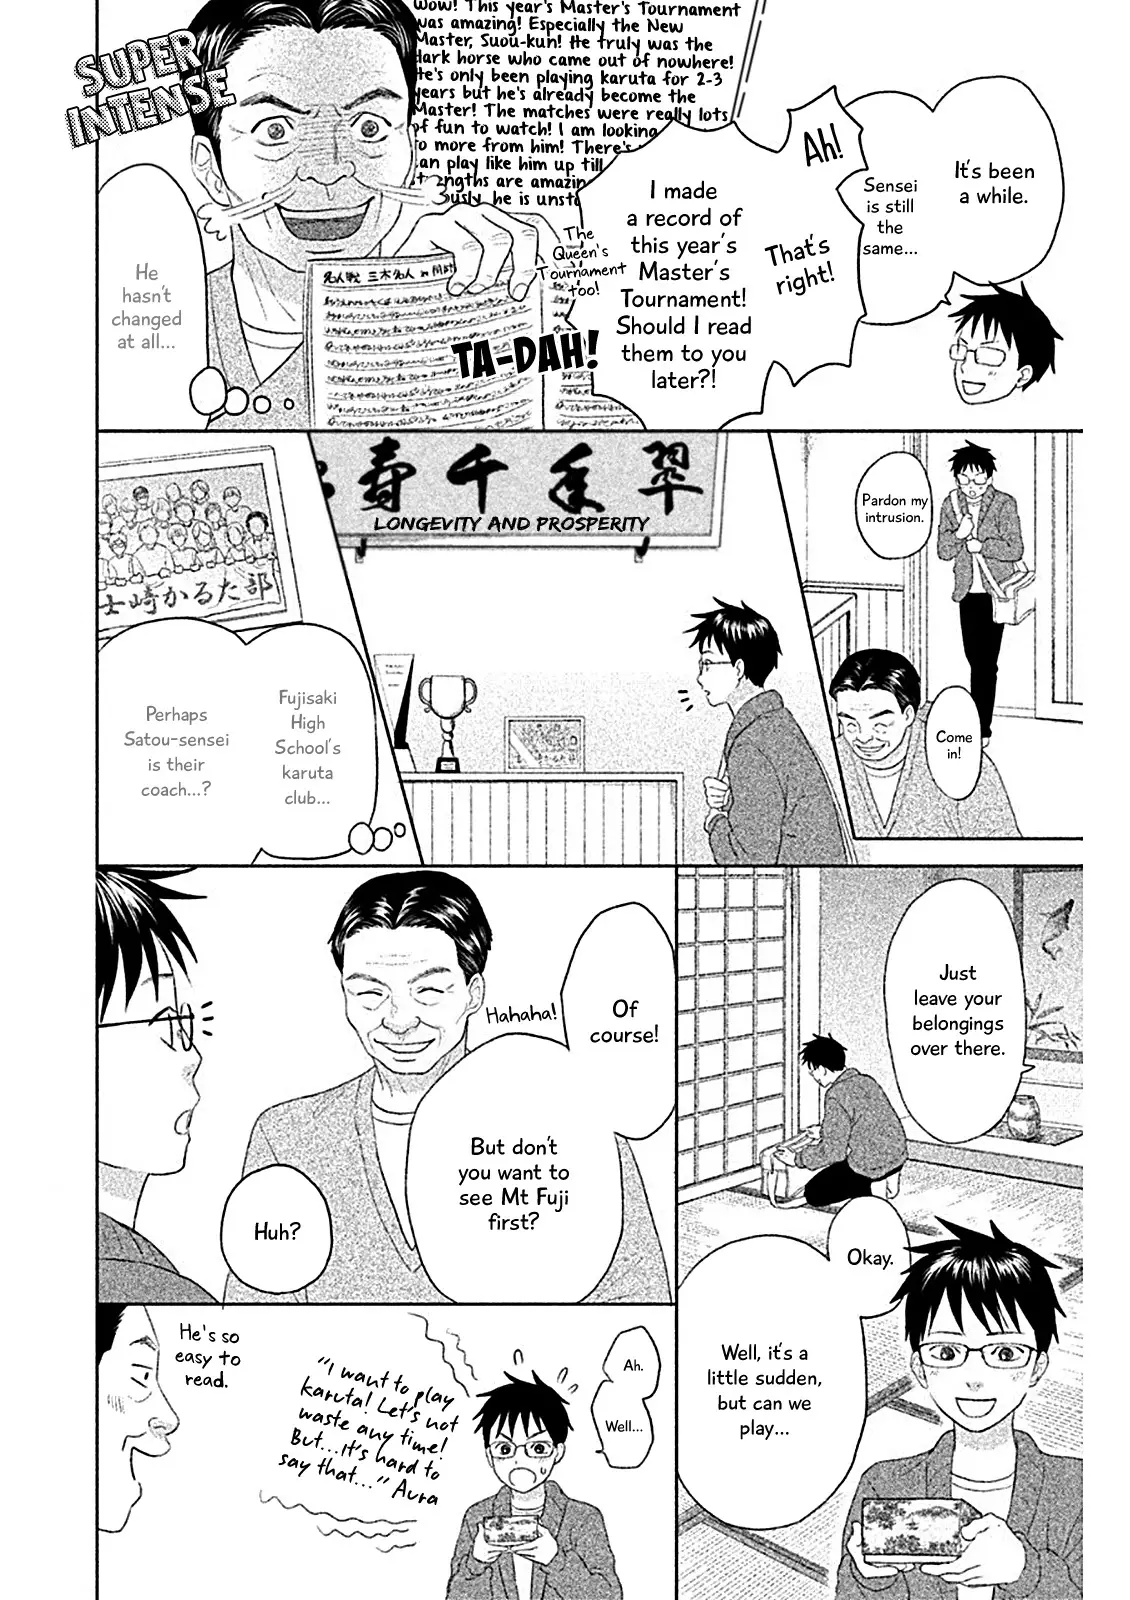 Chihayafuru: Middle School Arc - 6 page 17